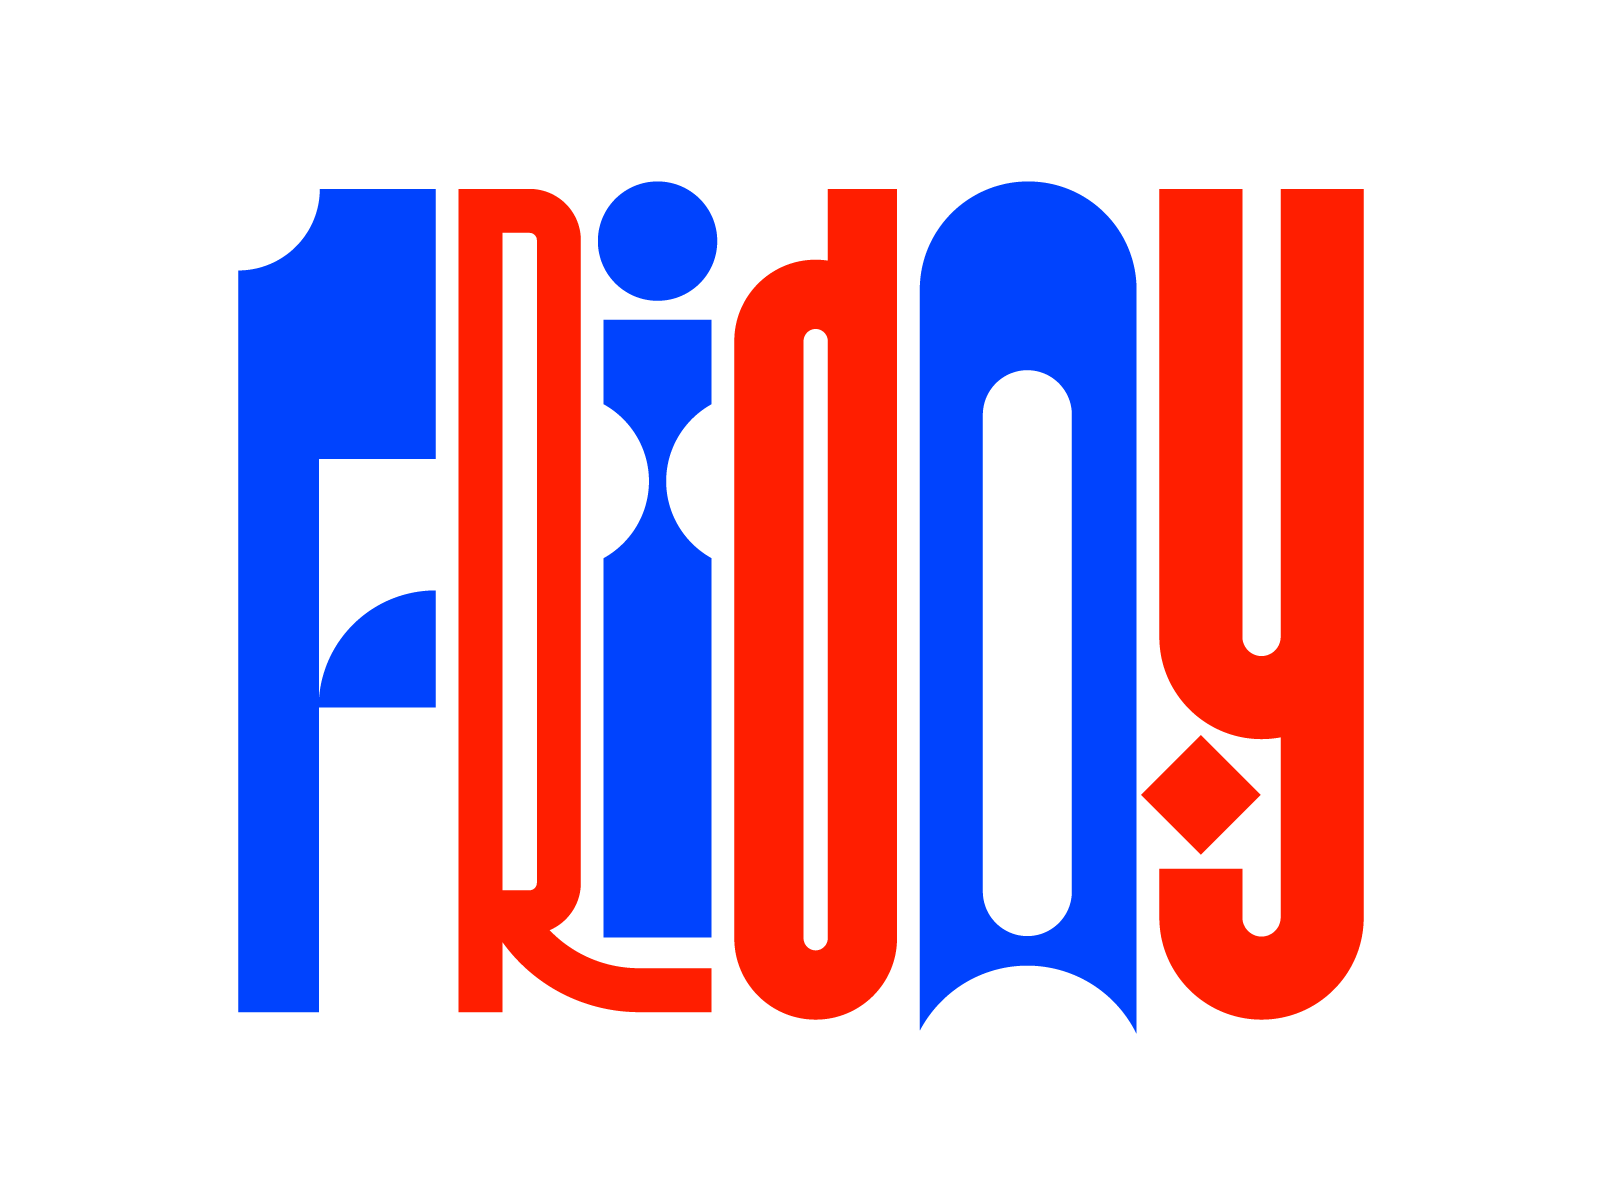 Friday design faelpt friday graphic design illustration instagram lettering letters type typedesign typography